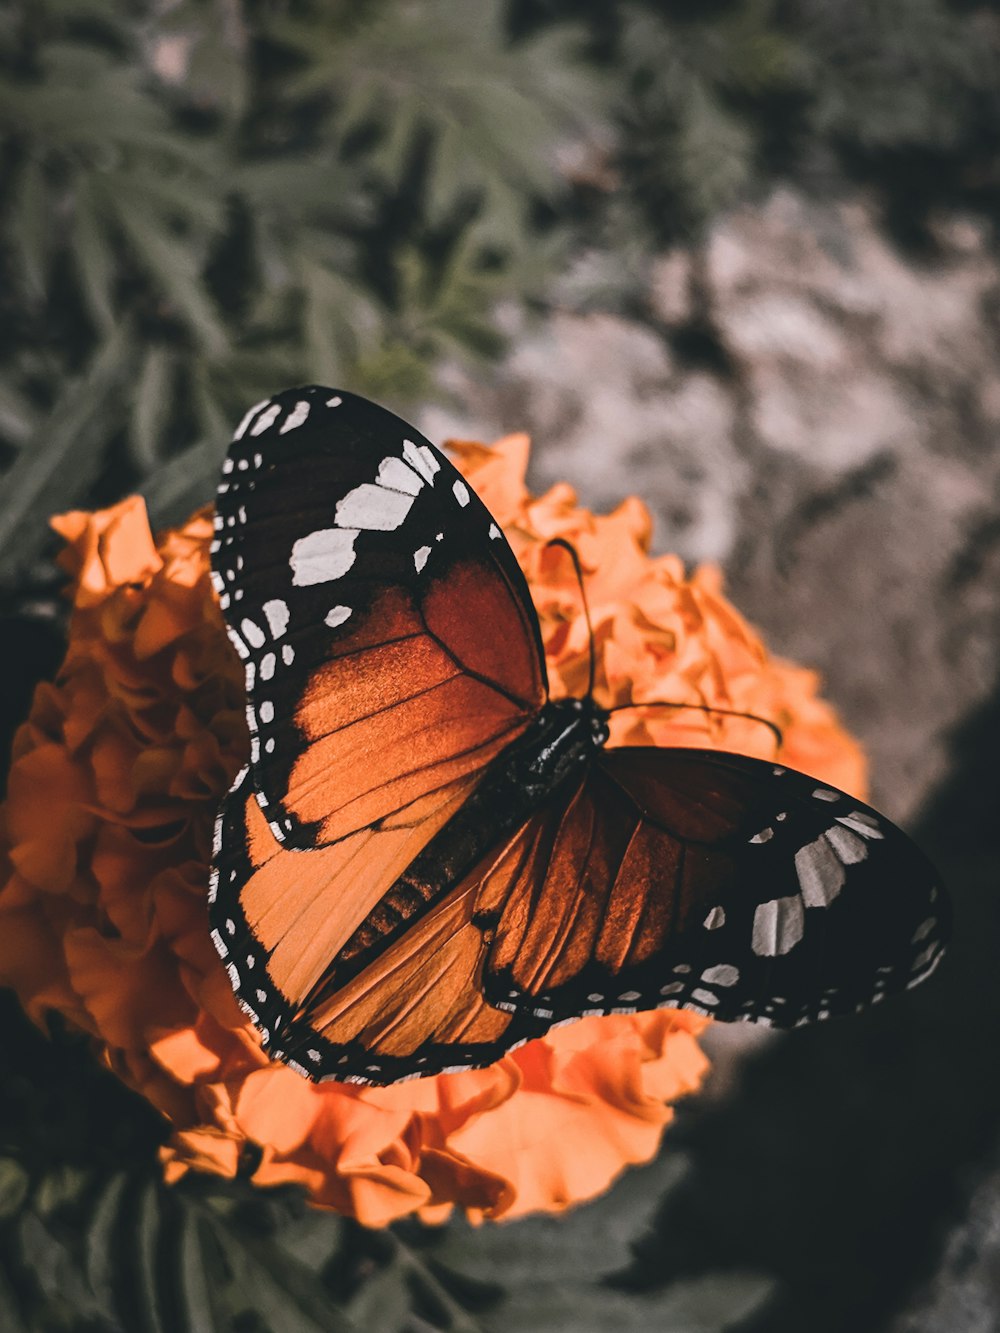 black and orange butterfly on orange flower